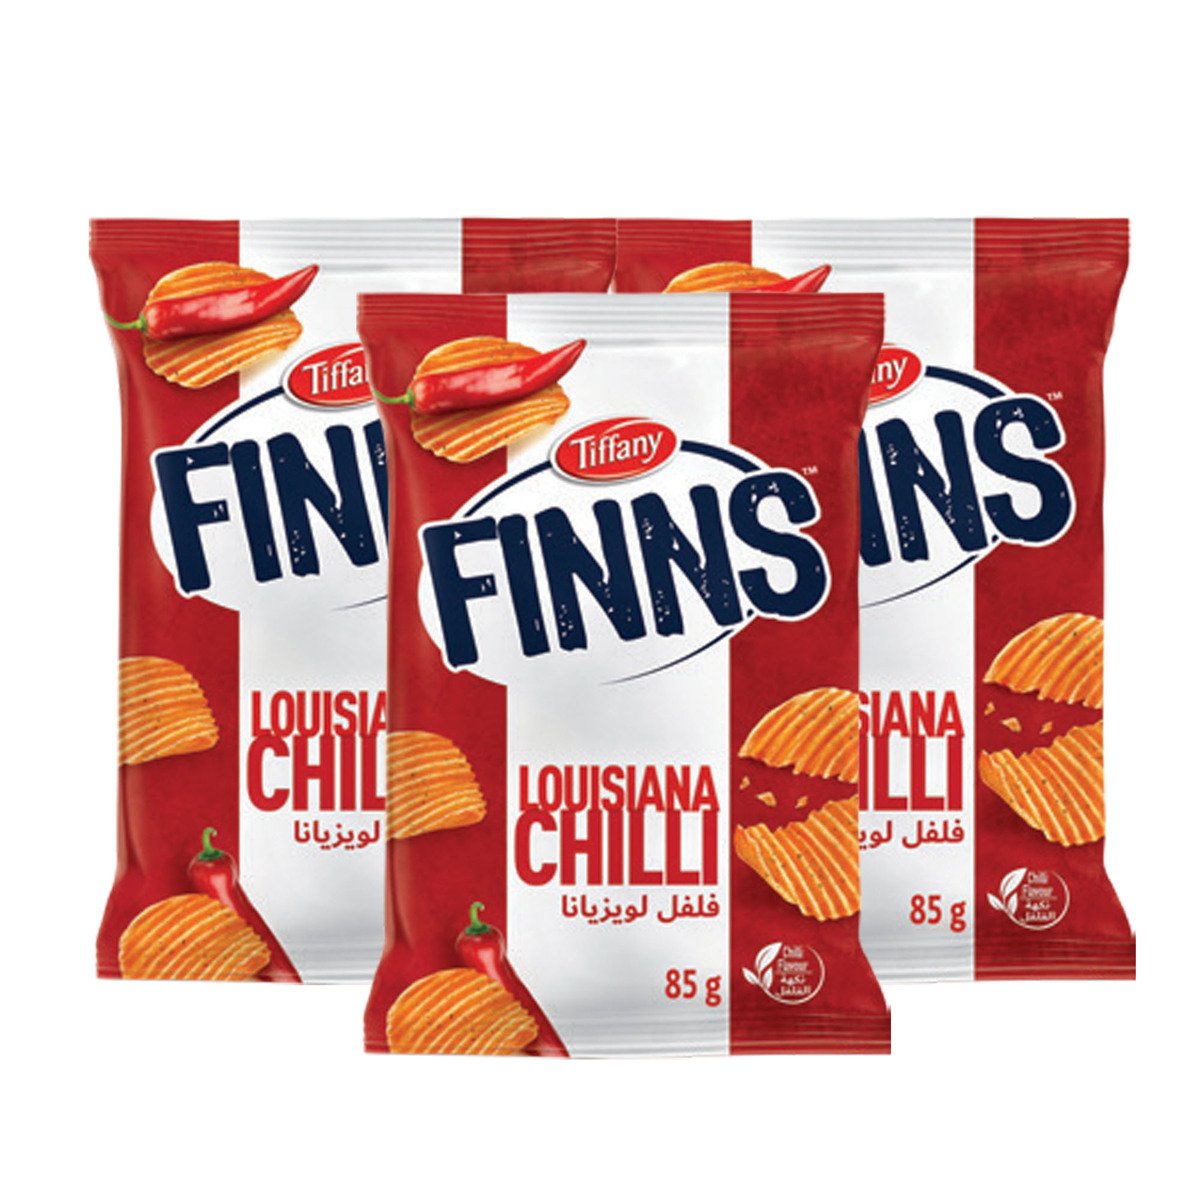 Tiffany Finns Chips Assorted 3 x 85 g